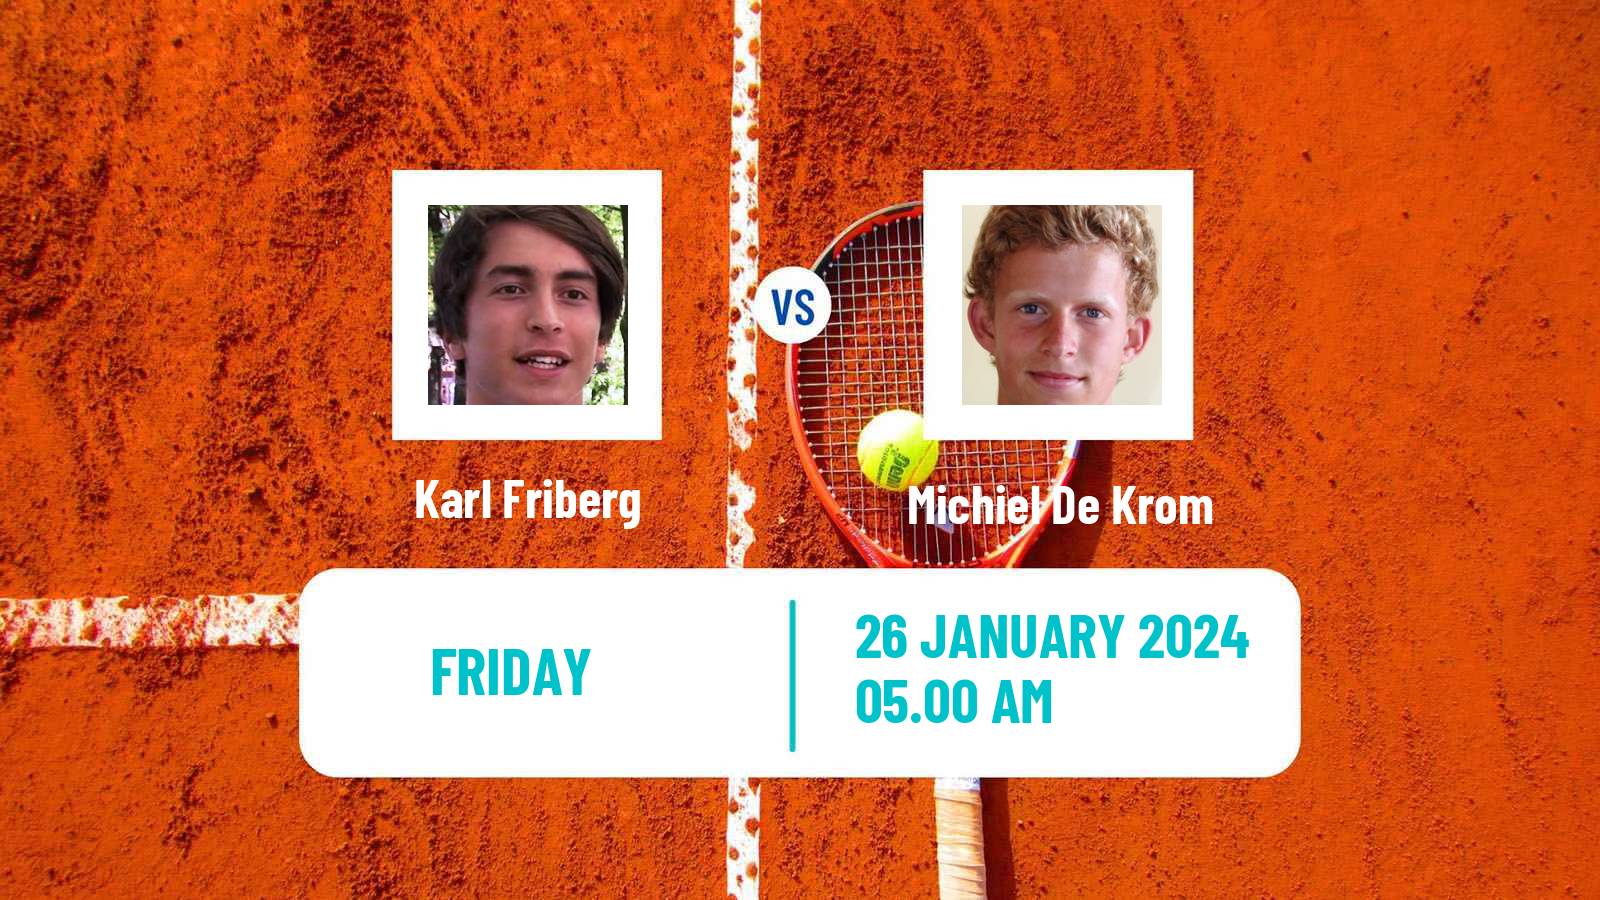 Tennis ITF M15 Manacor 3 Men Karl Friberg - Michiel De Krom